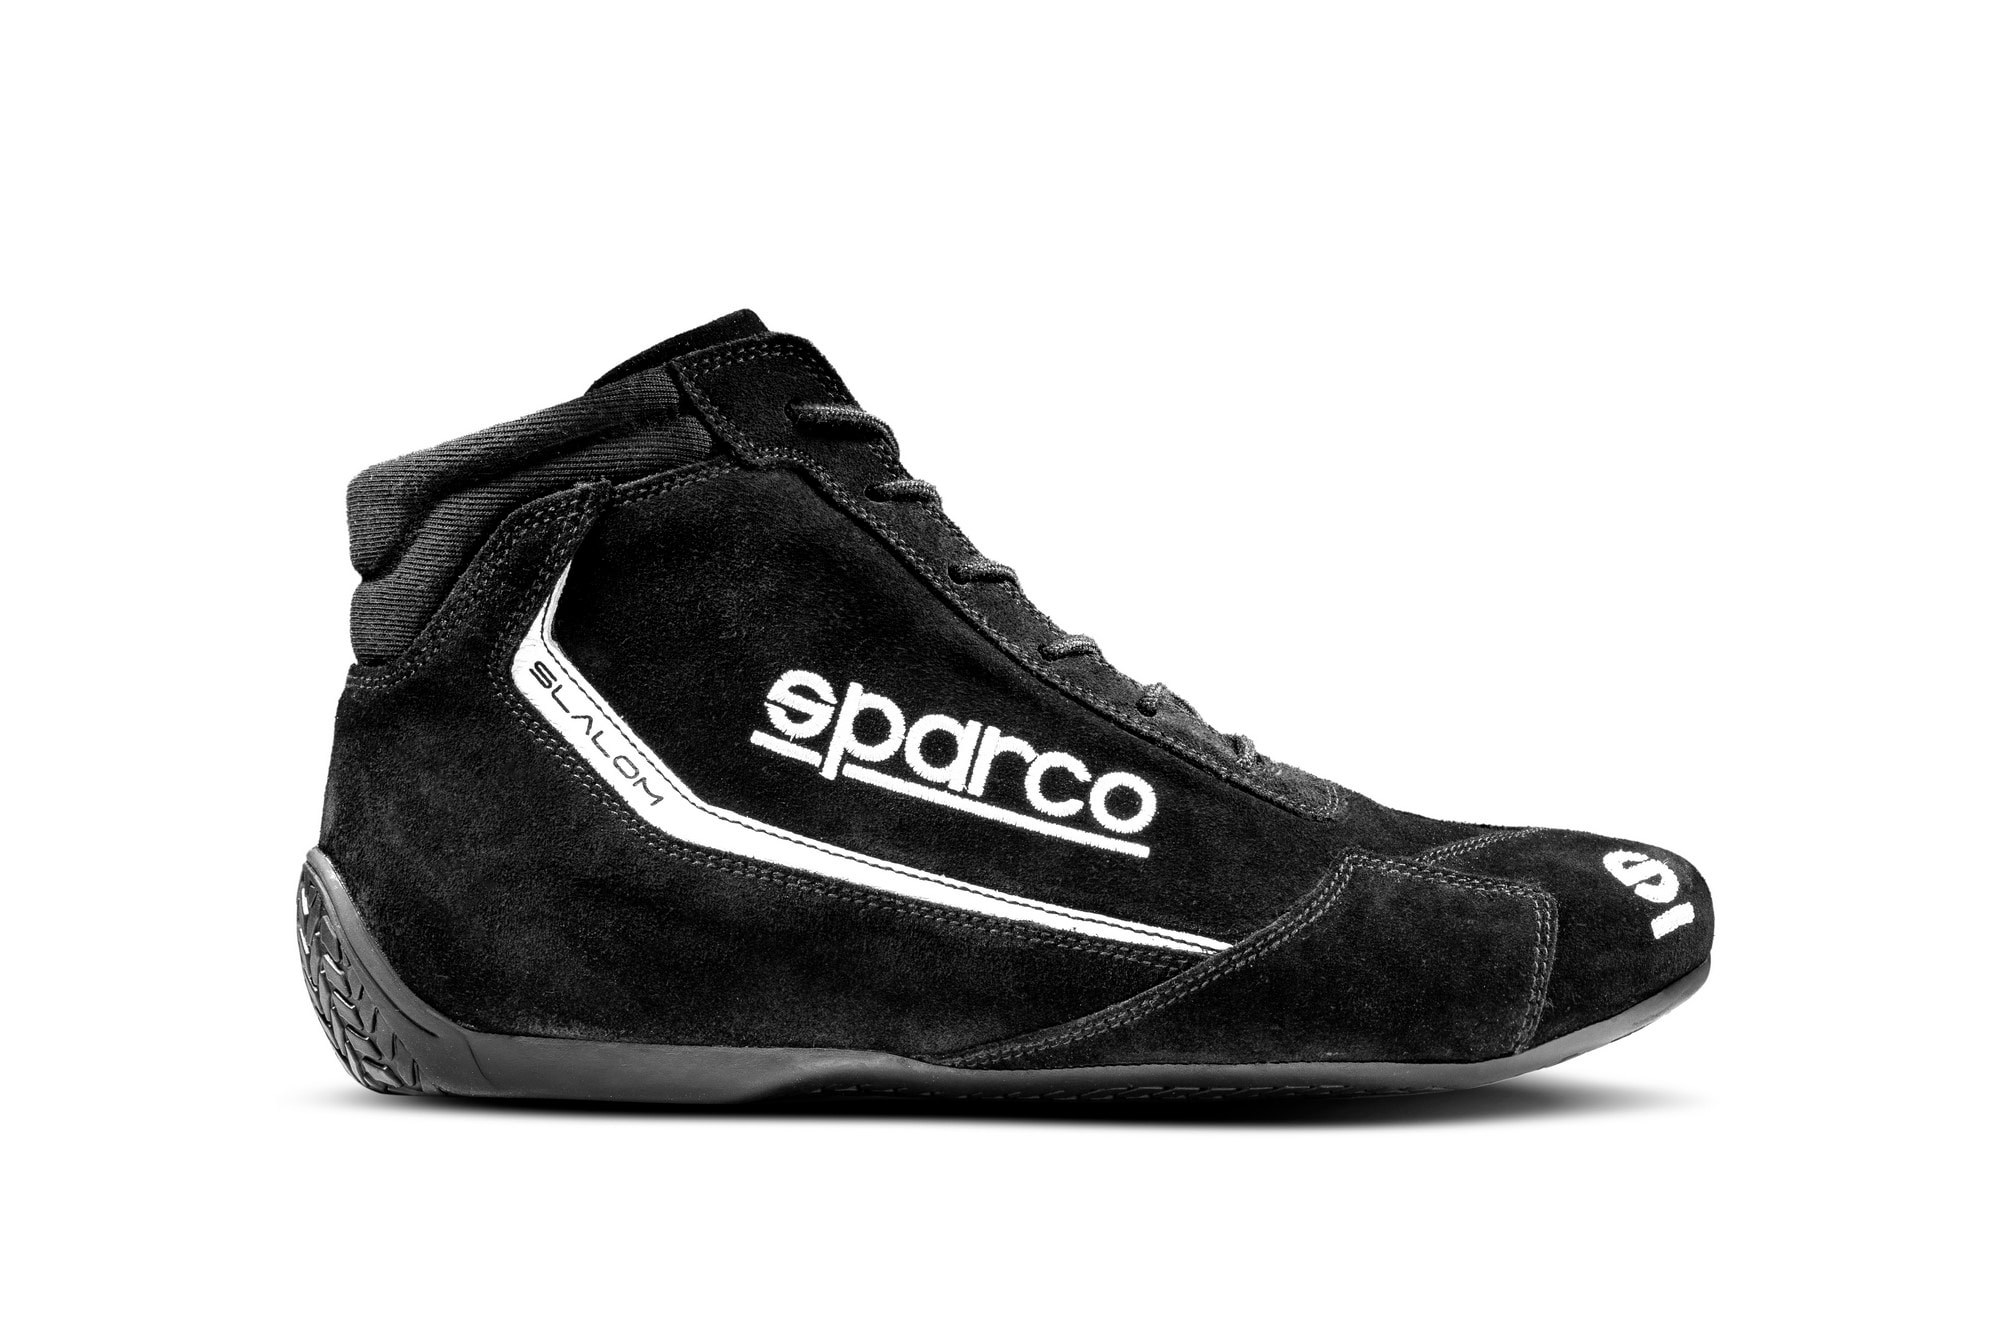 Kengät Sparco Slalom Musta